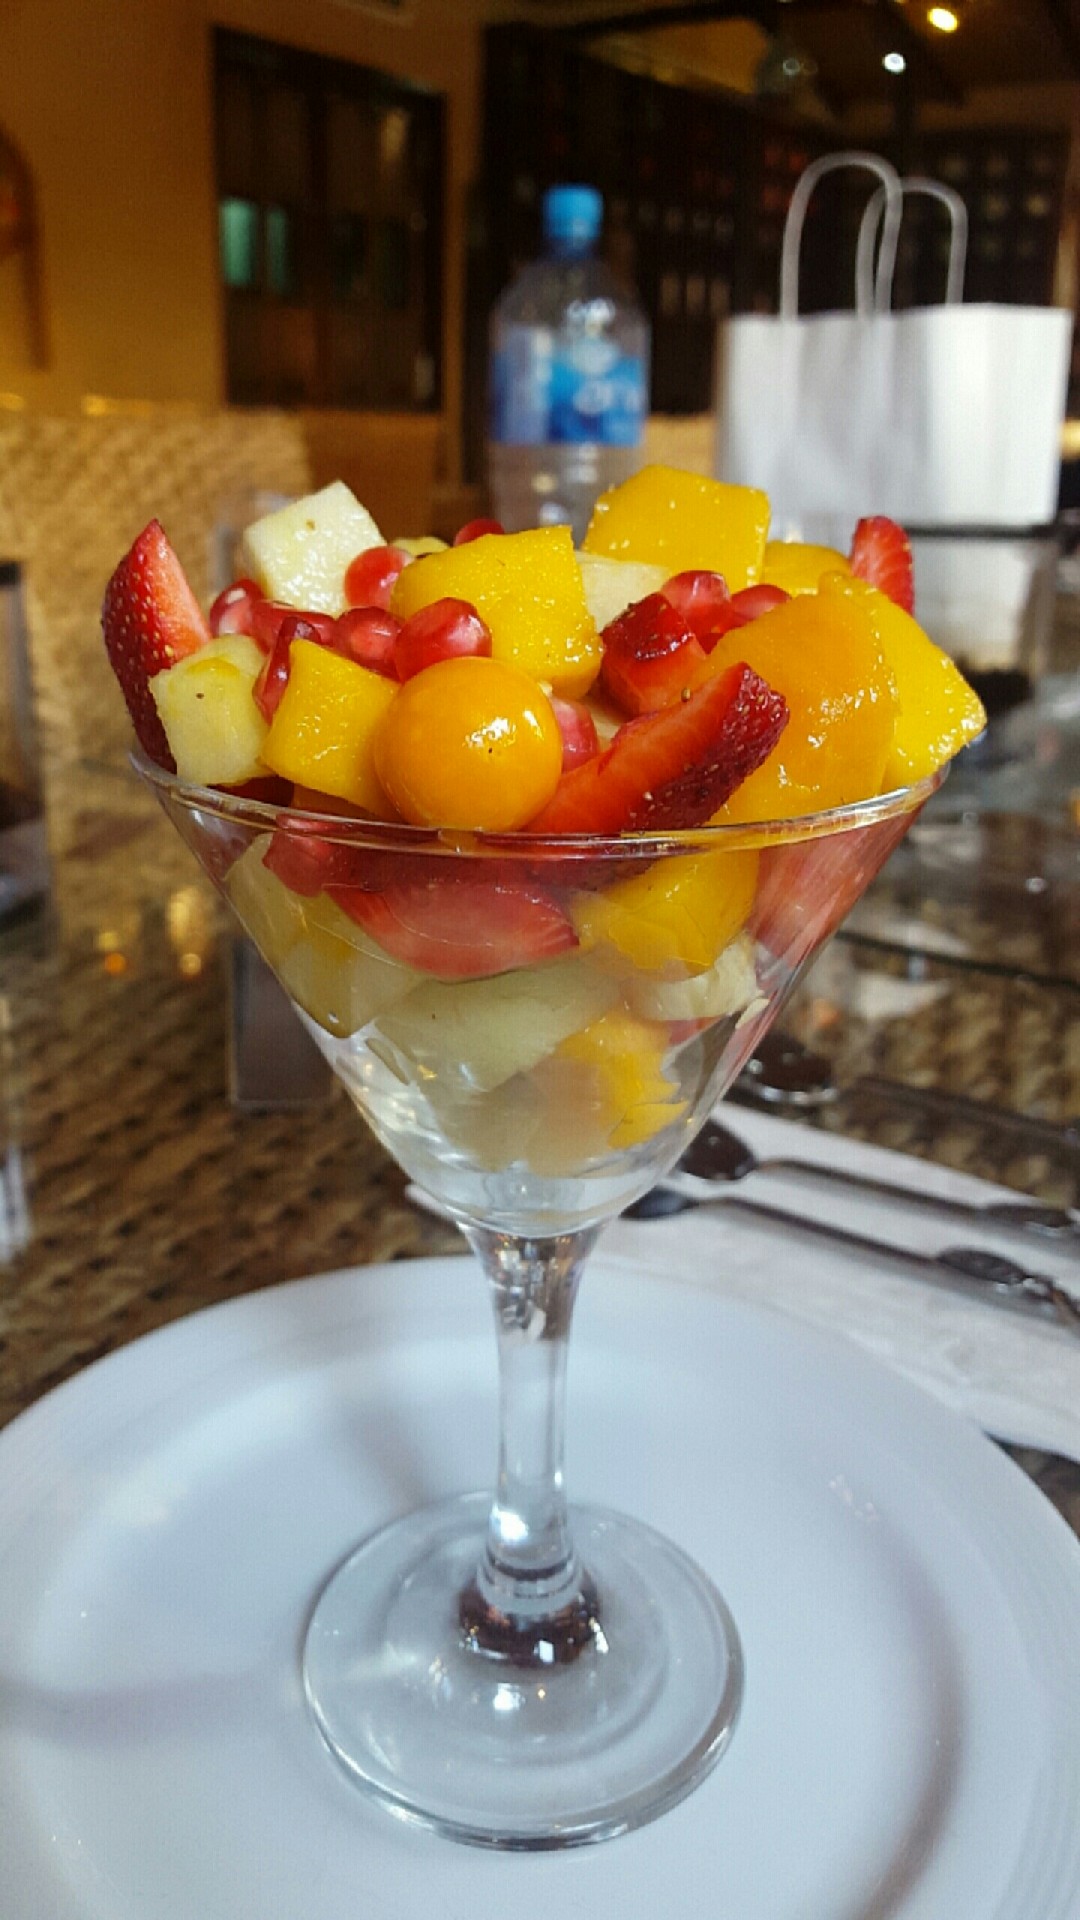 Fresh fruit salad😎 @ Passion Restaurant And Cafe - Bahrain